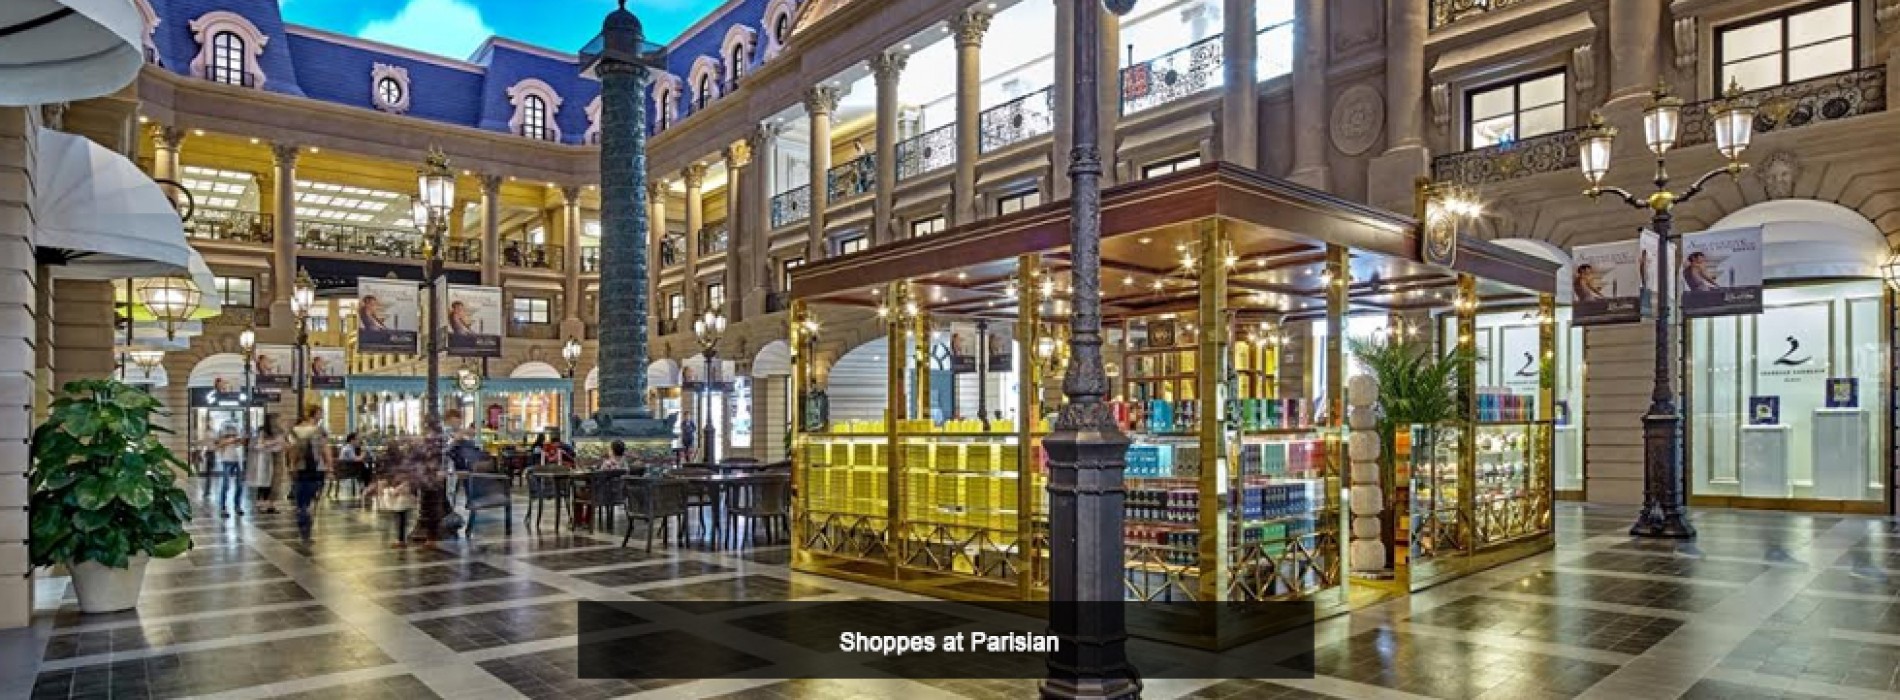 Shoppes at Parisian wins Major Accolade in  Prestigious Retail Industry Awards